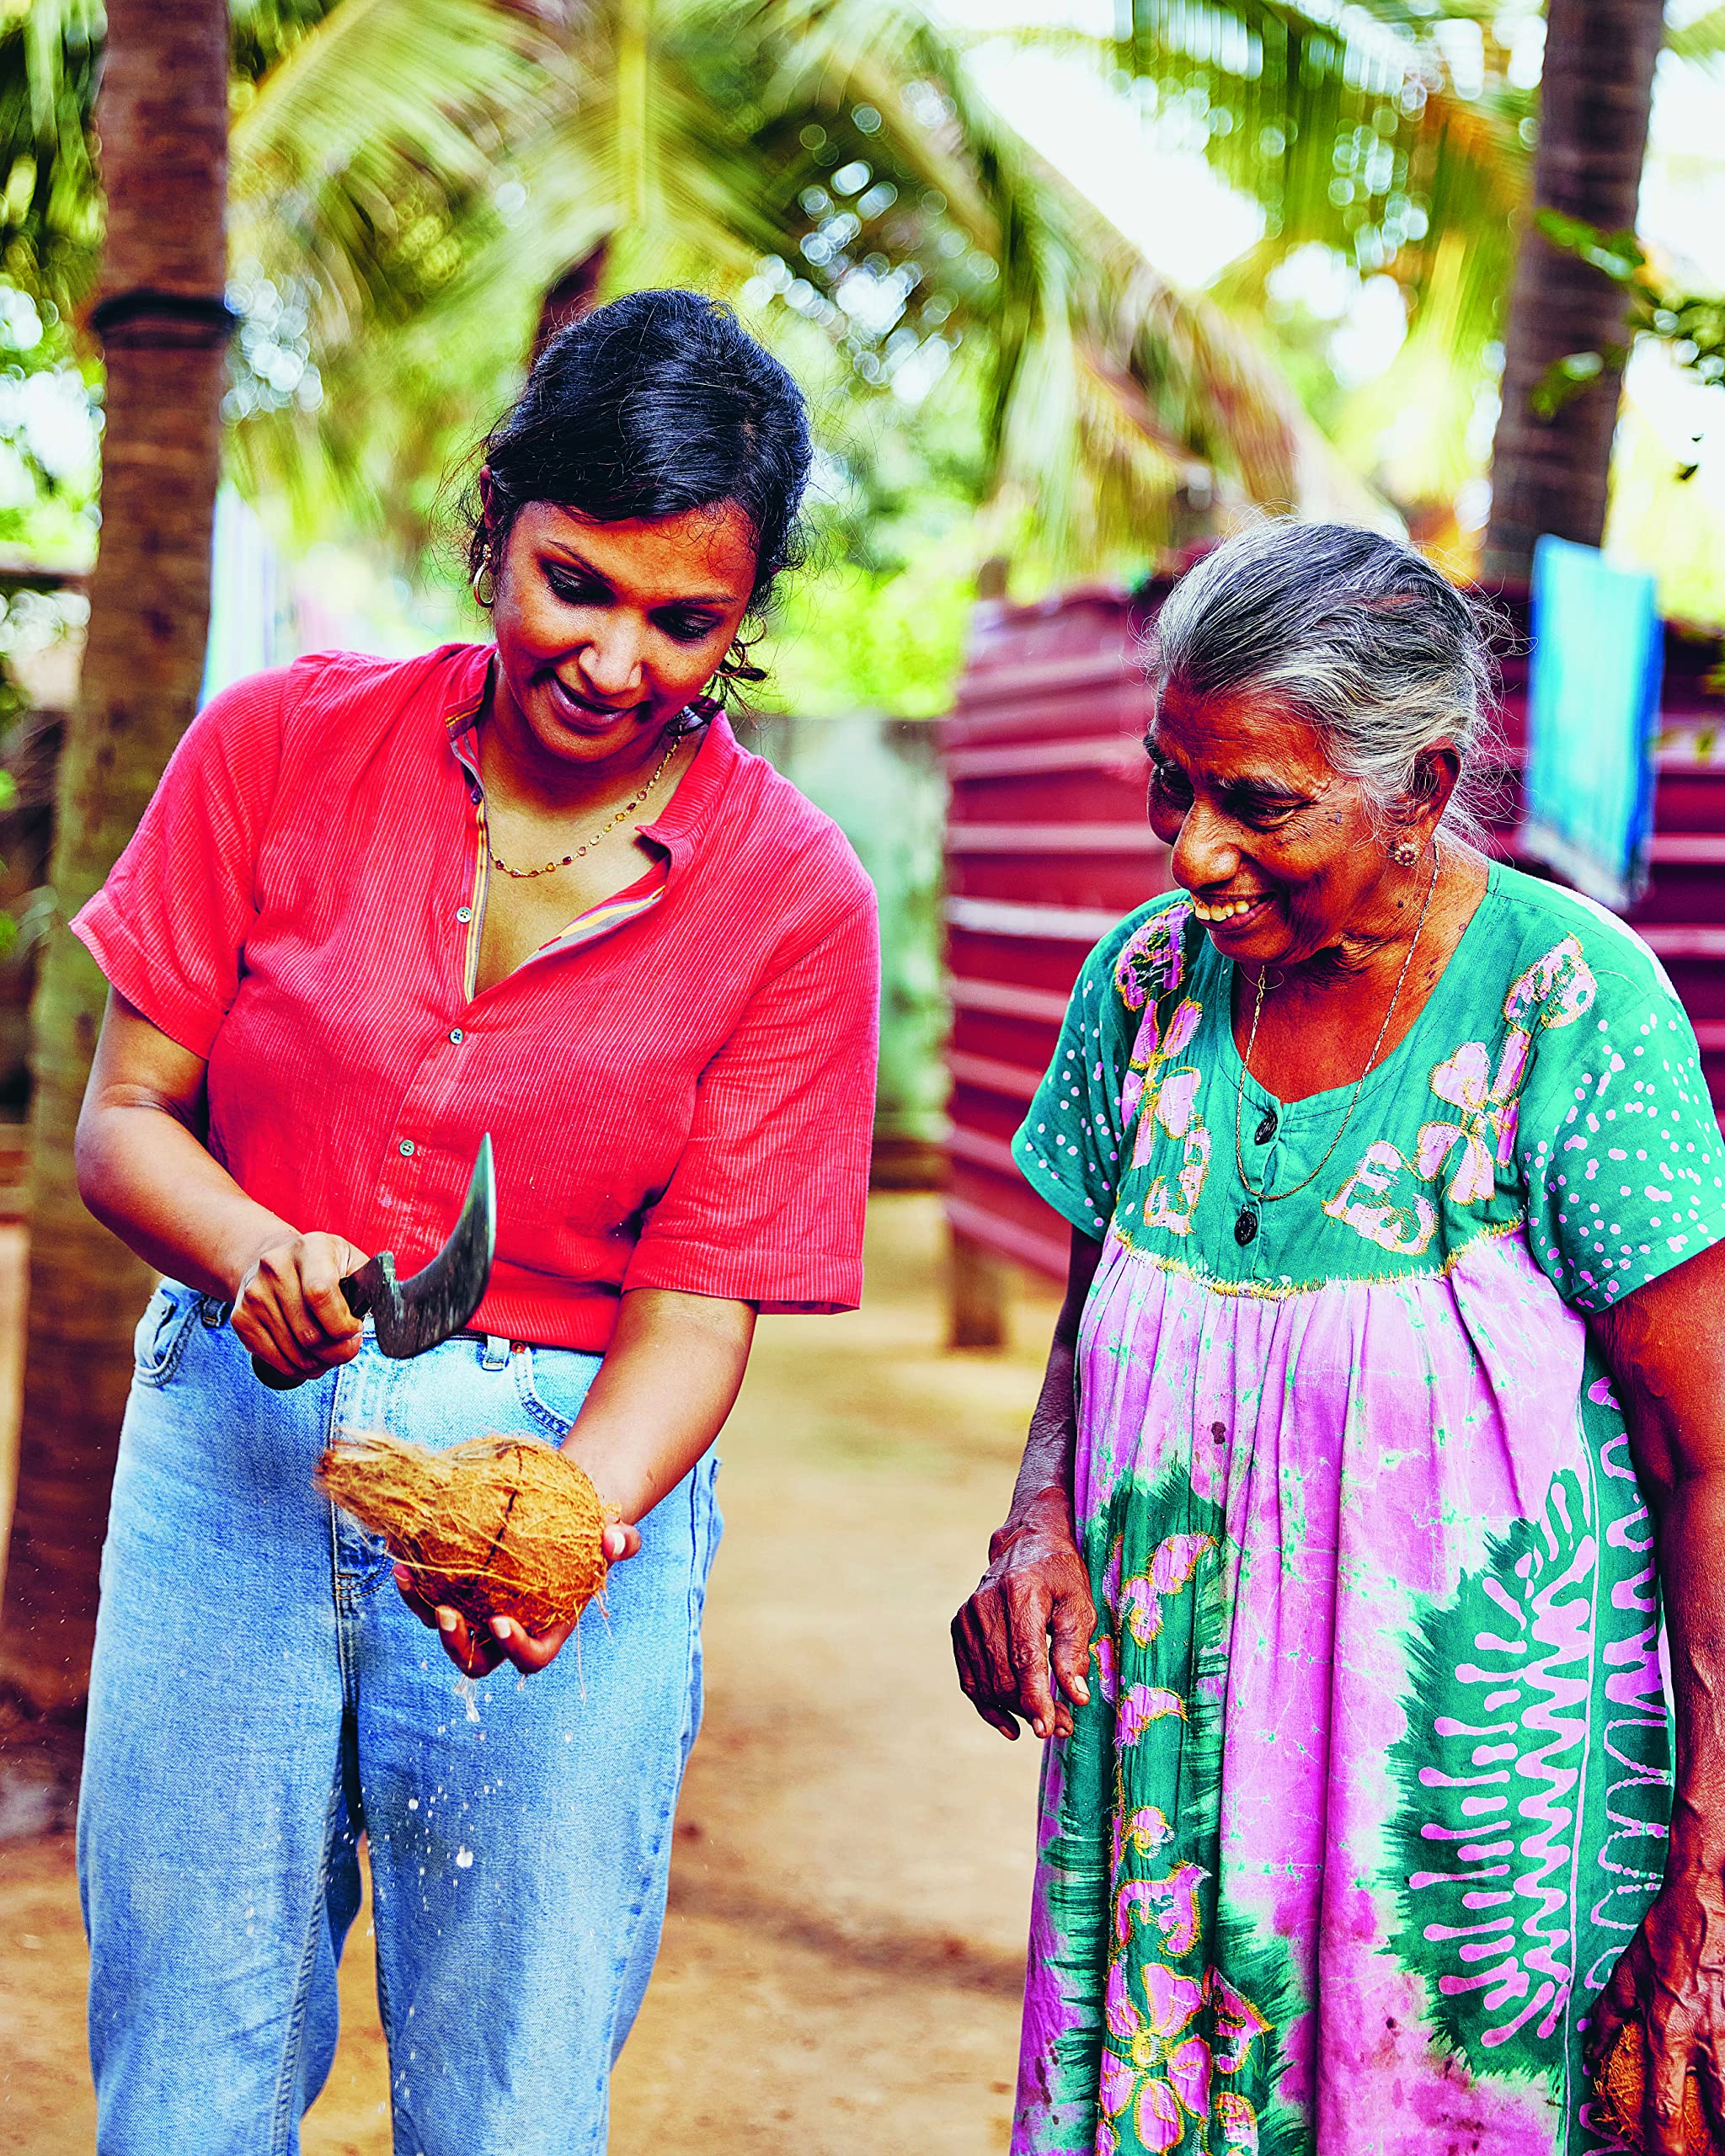 Rambutan: Recipes from Sri Lanka (Cynthia Shanmugalingam)